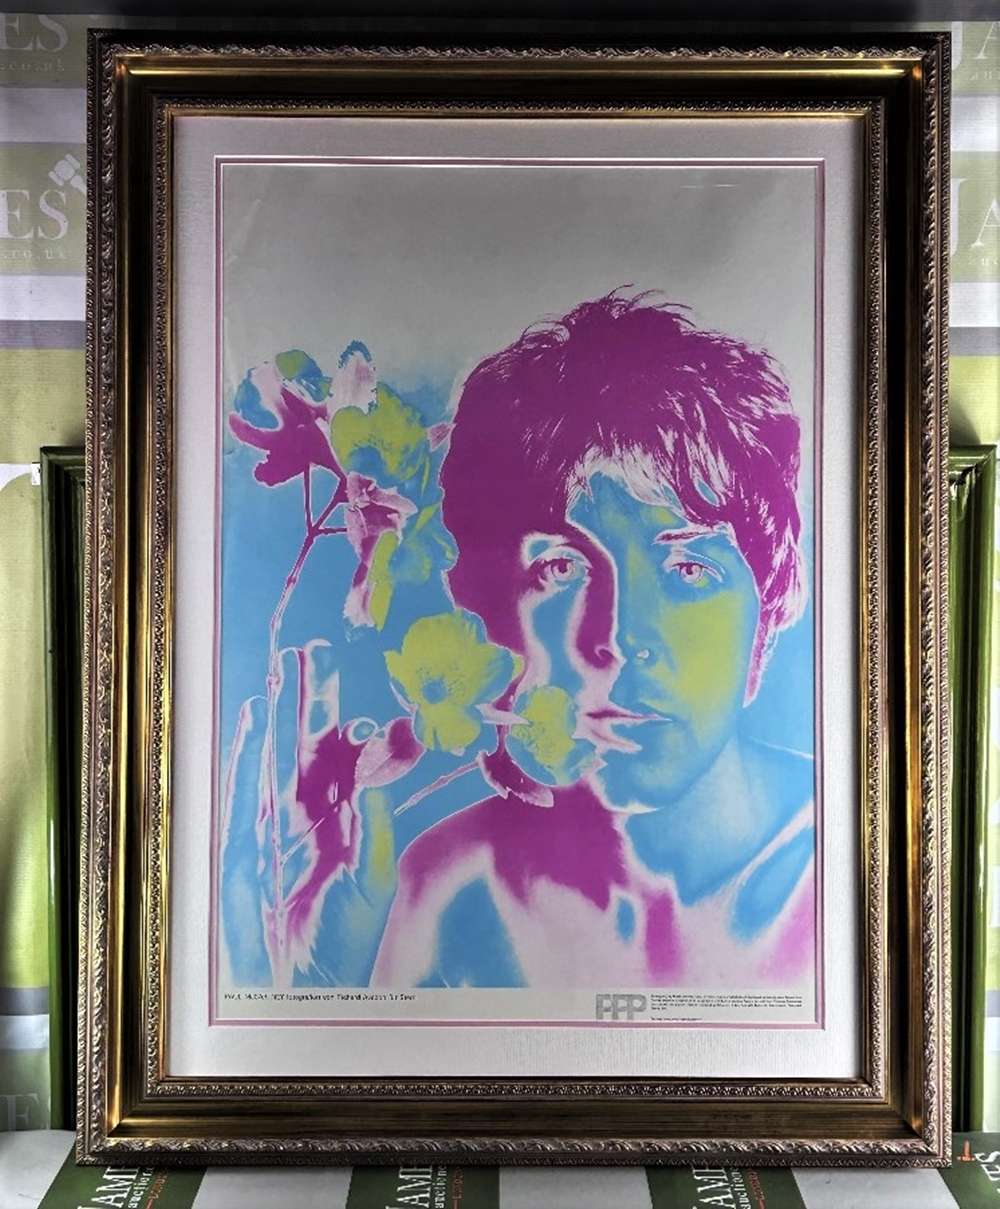 Original 1967 Vintage Paul McCartney Beatles-Richard Avedon